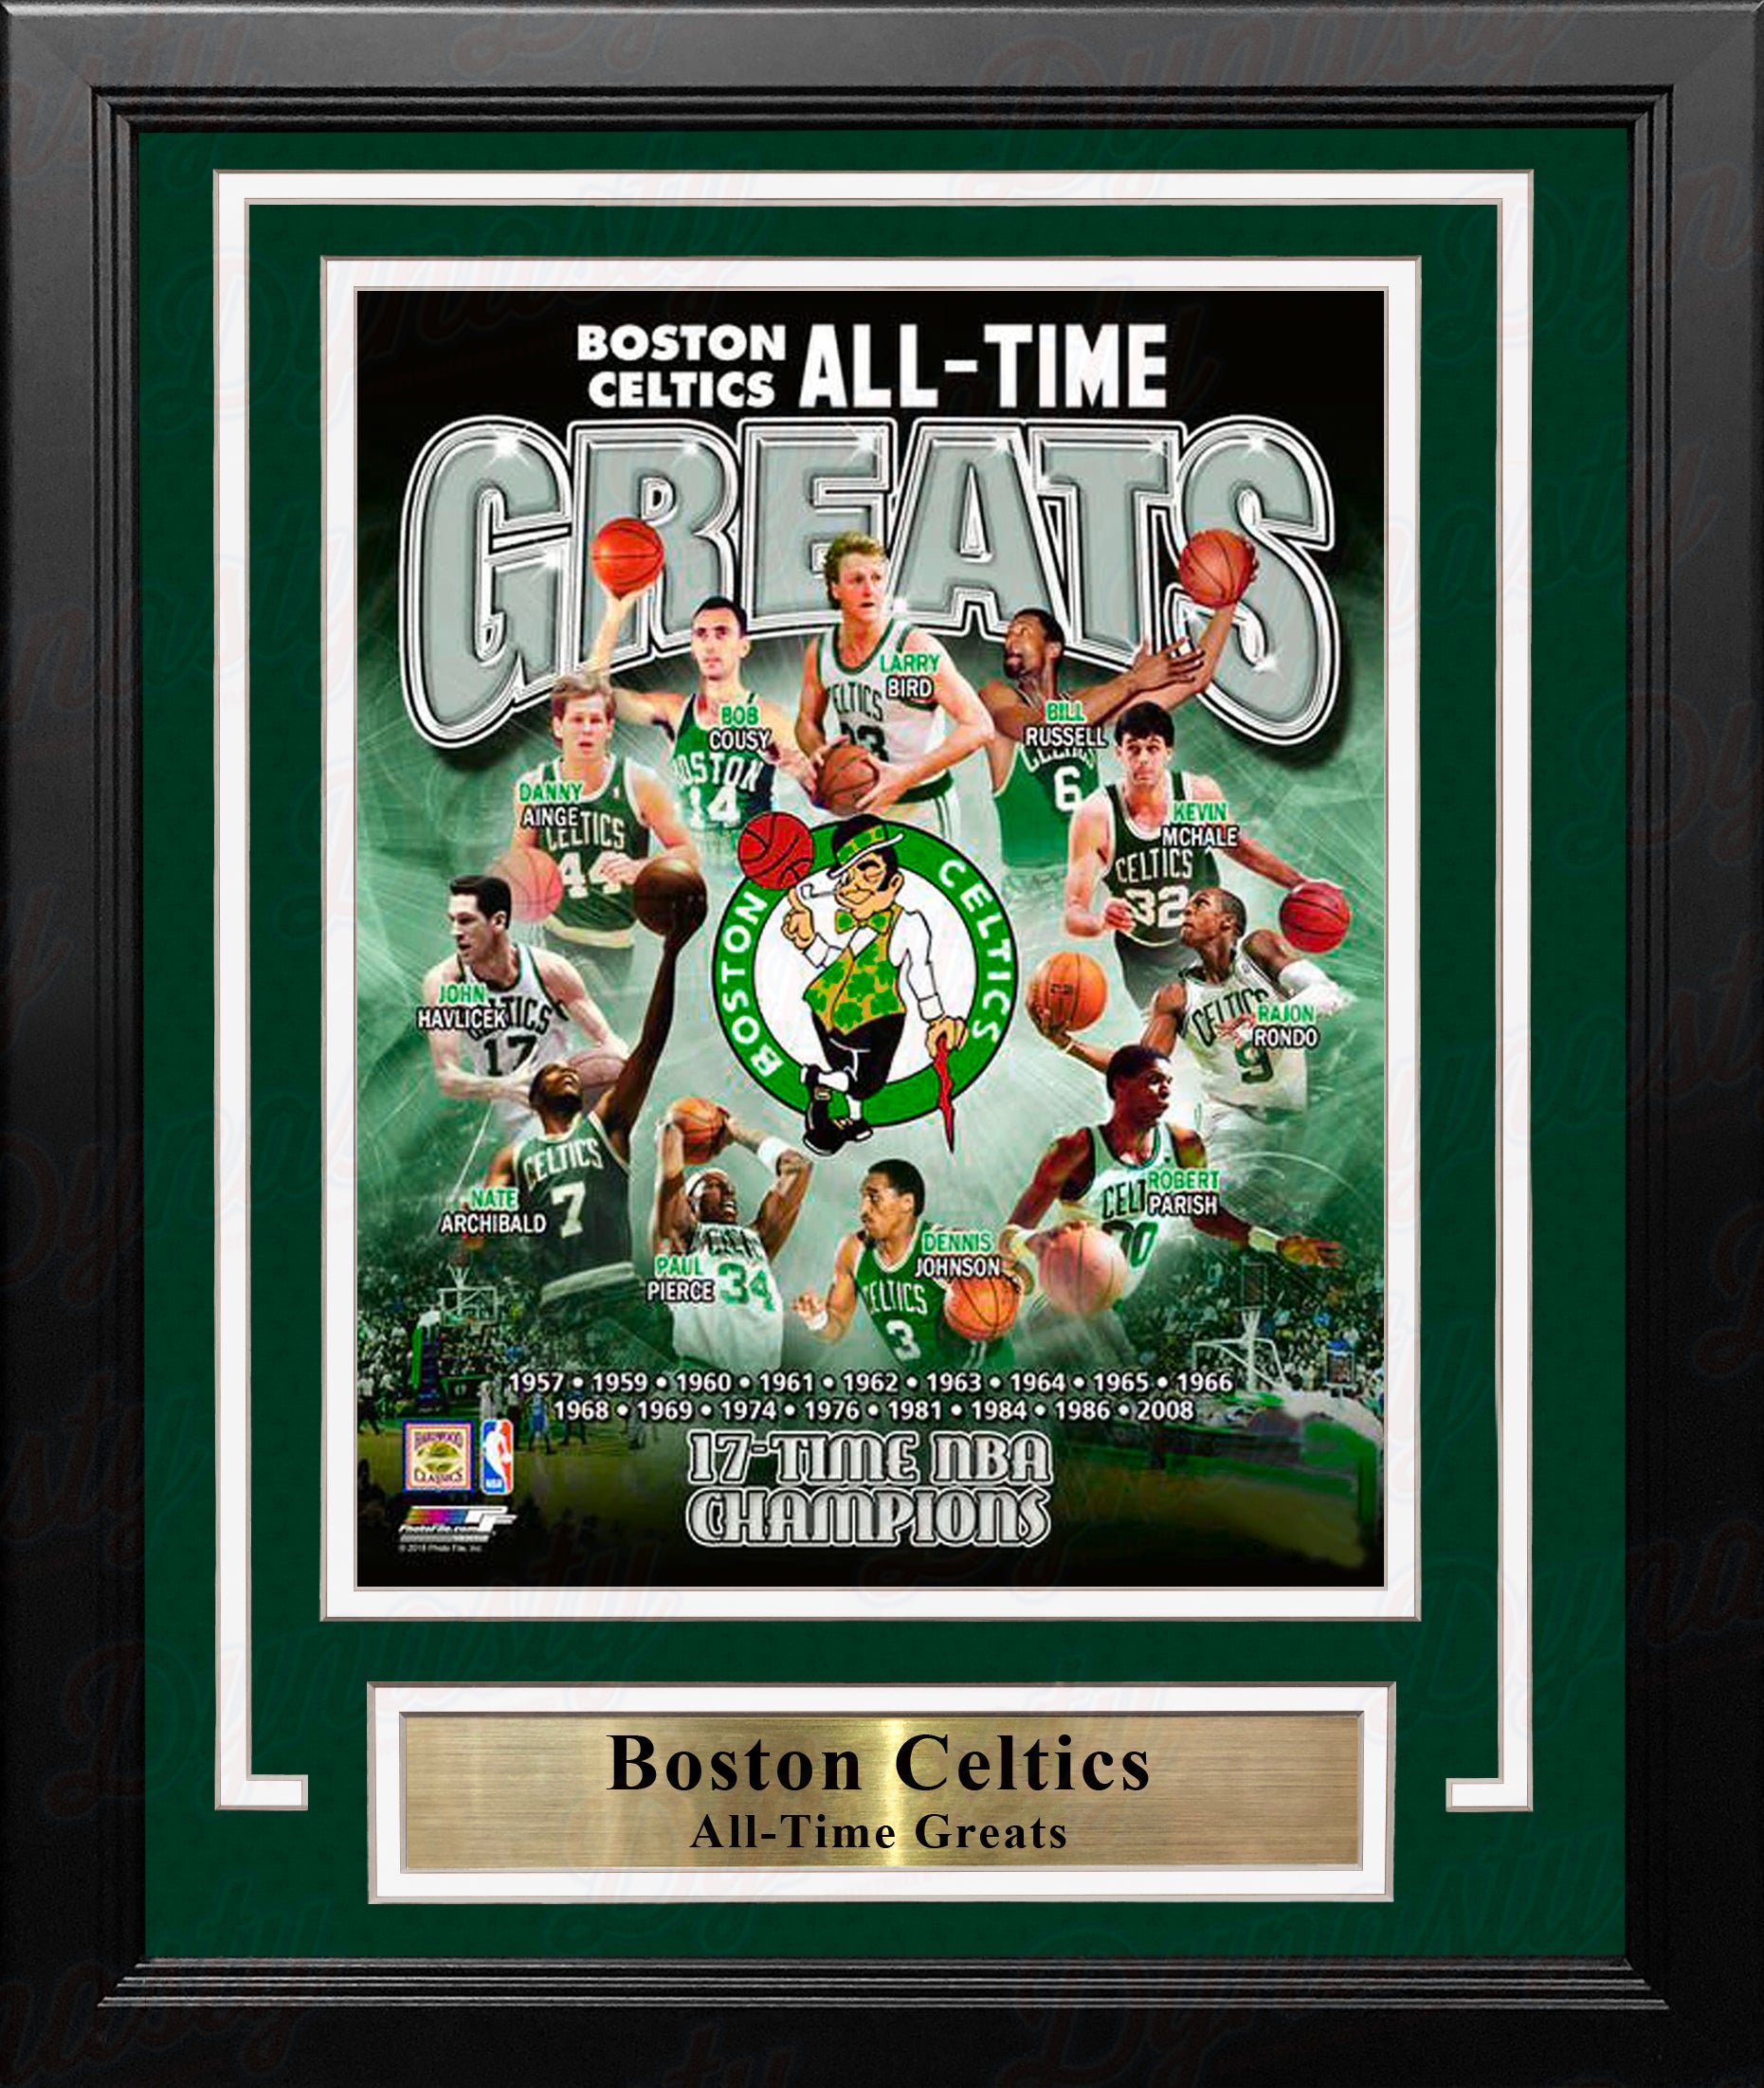 Boston Celtics Dream Big - Image 10 from Designers Pitch Black